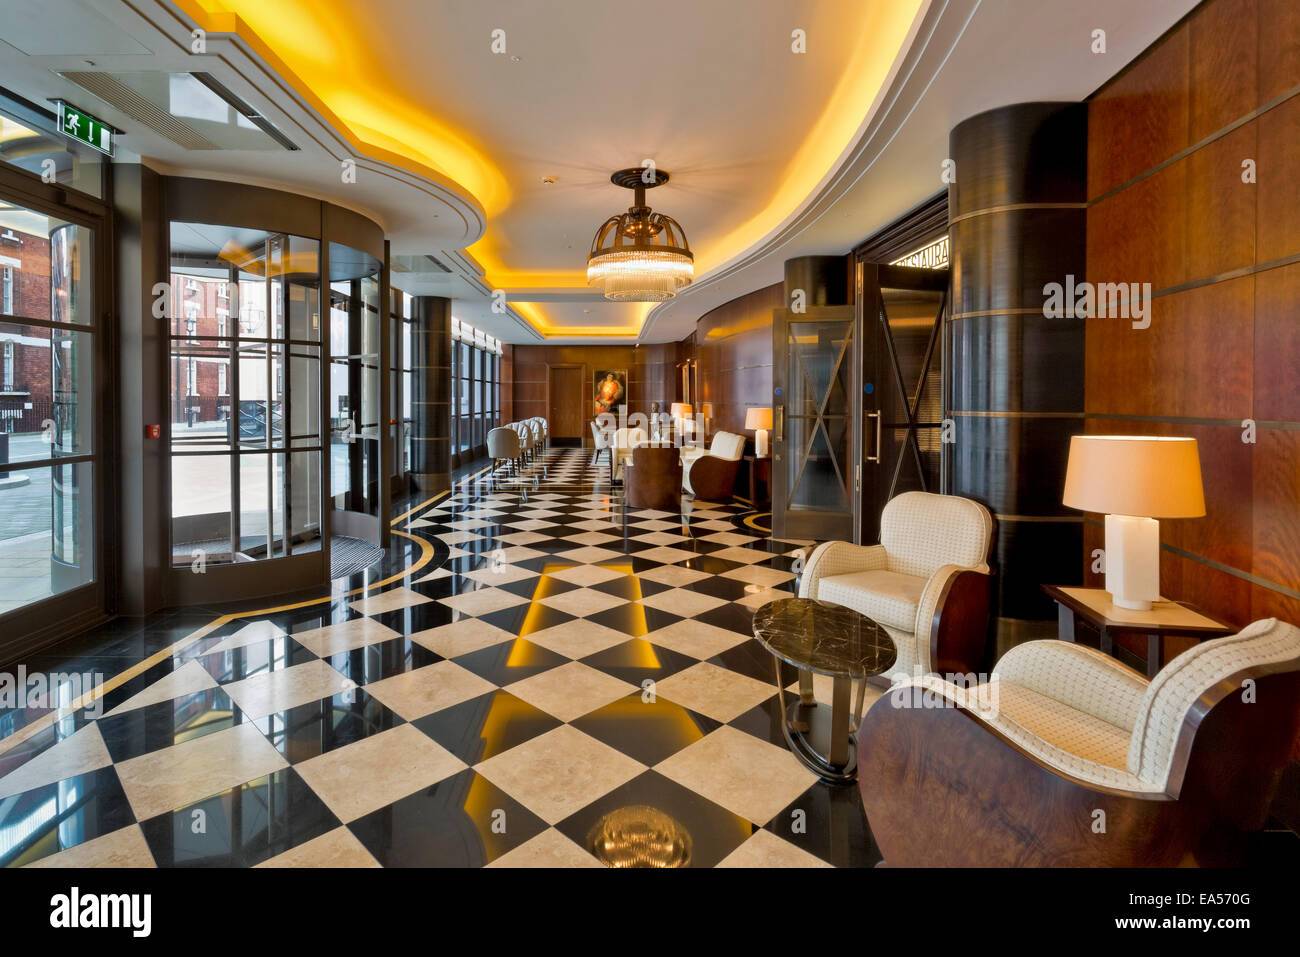 Das Beaumont Hotel, London, Vereinigtes Königreich. Architekt: Reardon Smith Architects Limited, 2014. Eingang-Lobby-Rezeption. Stockfoto